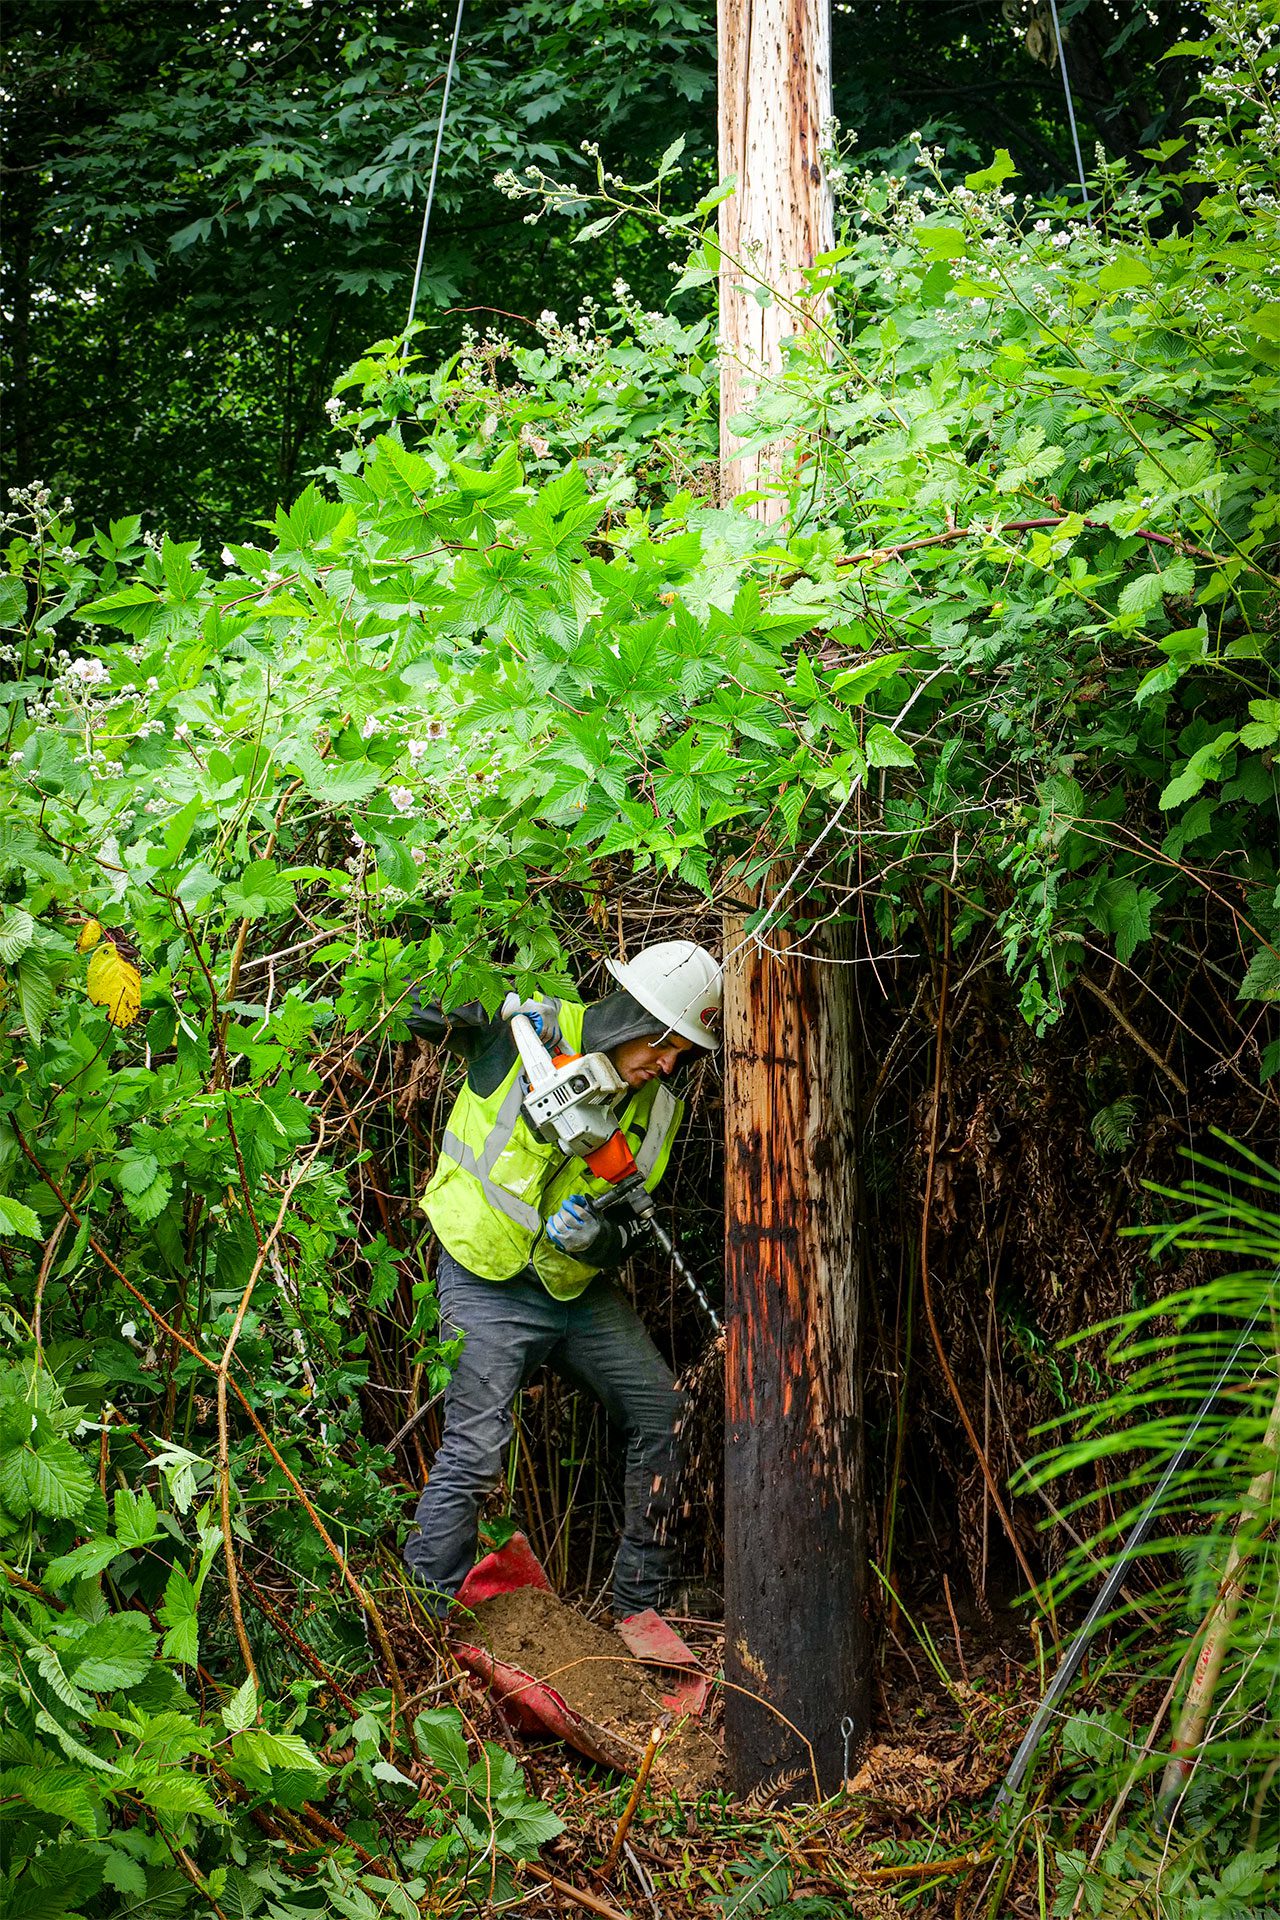 Pacific pole inspector bores a hole into a utility pole